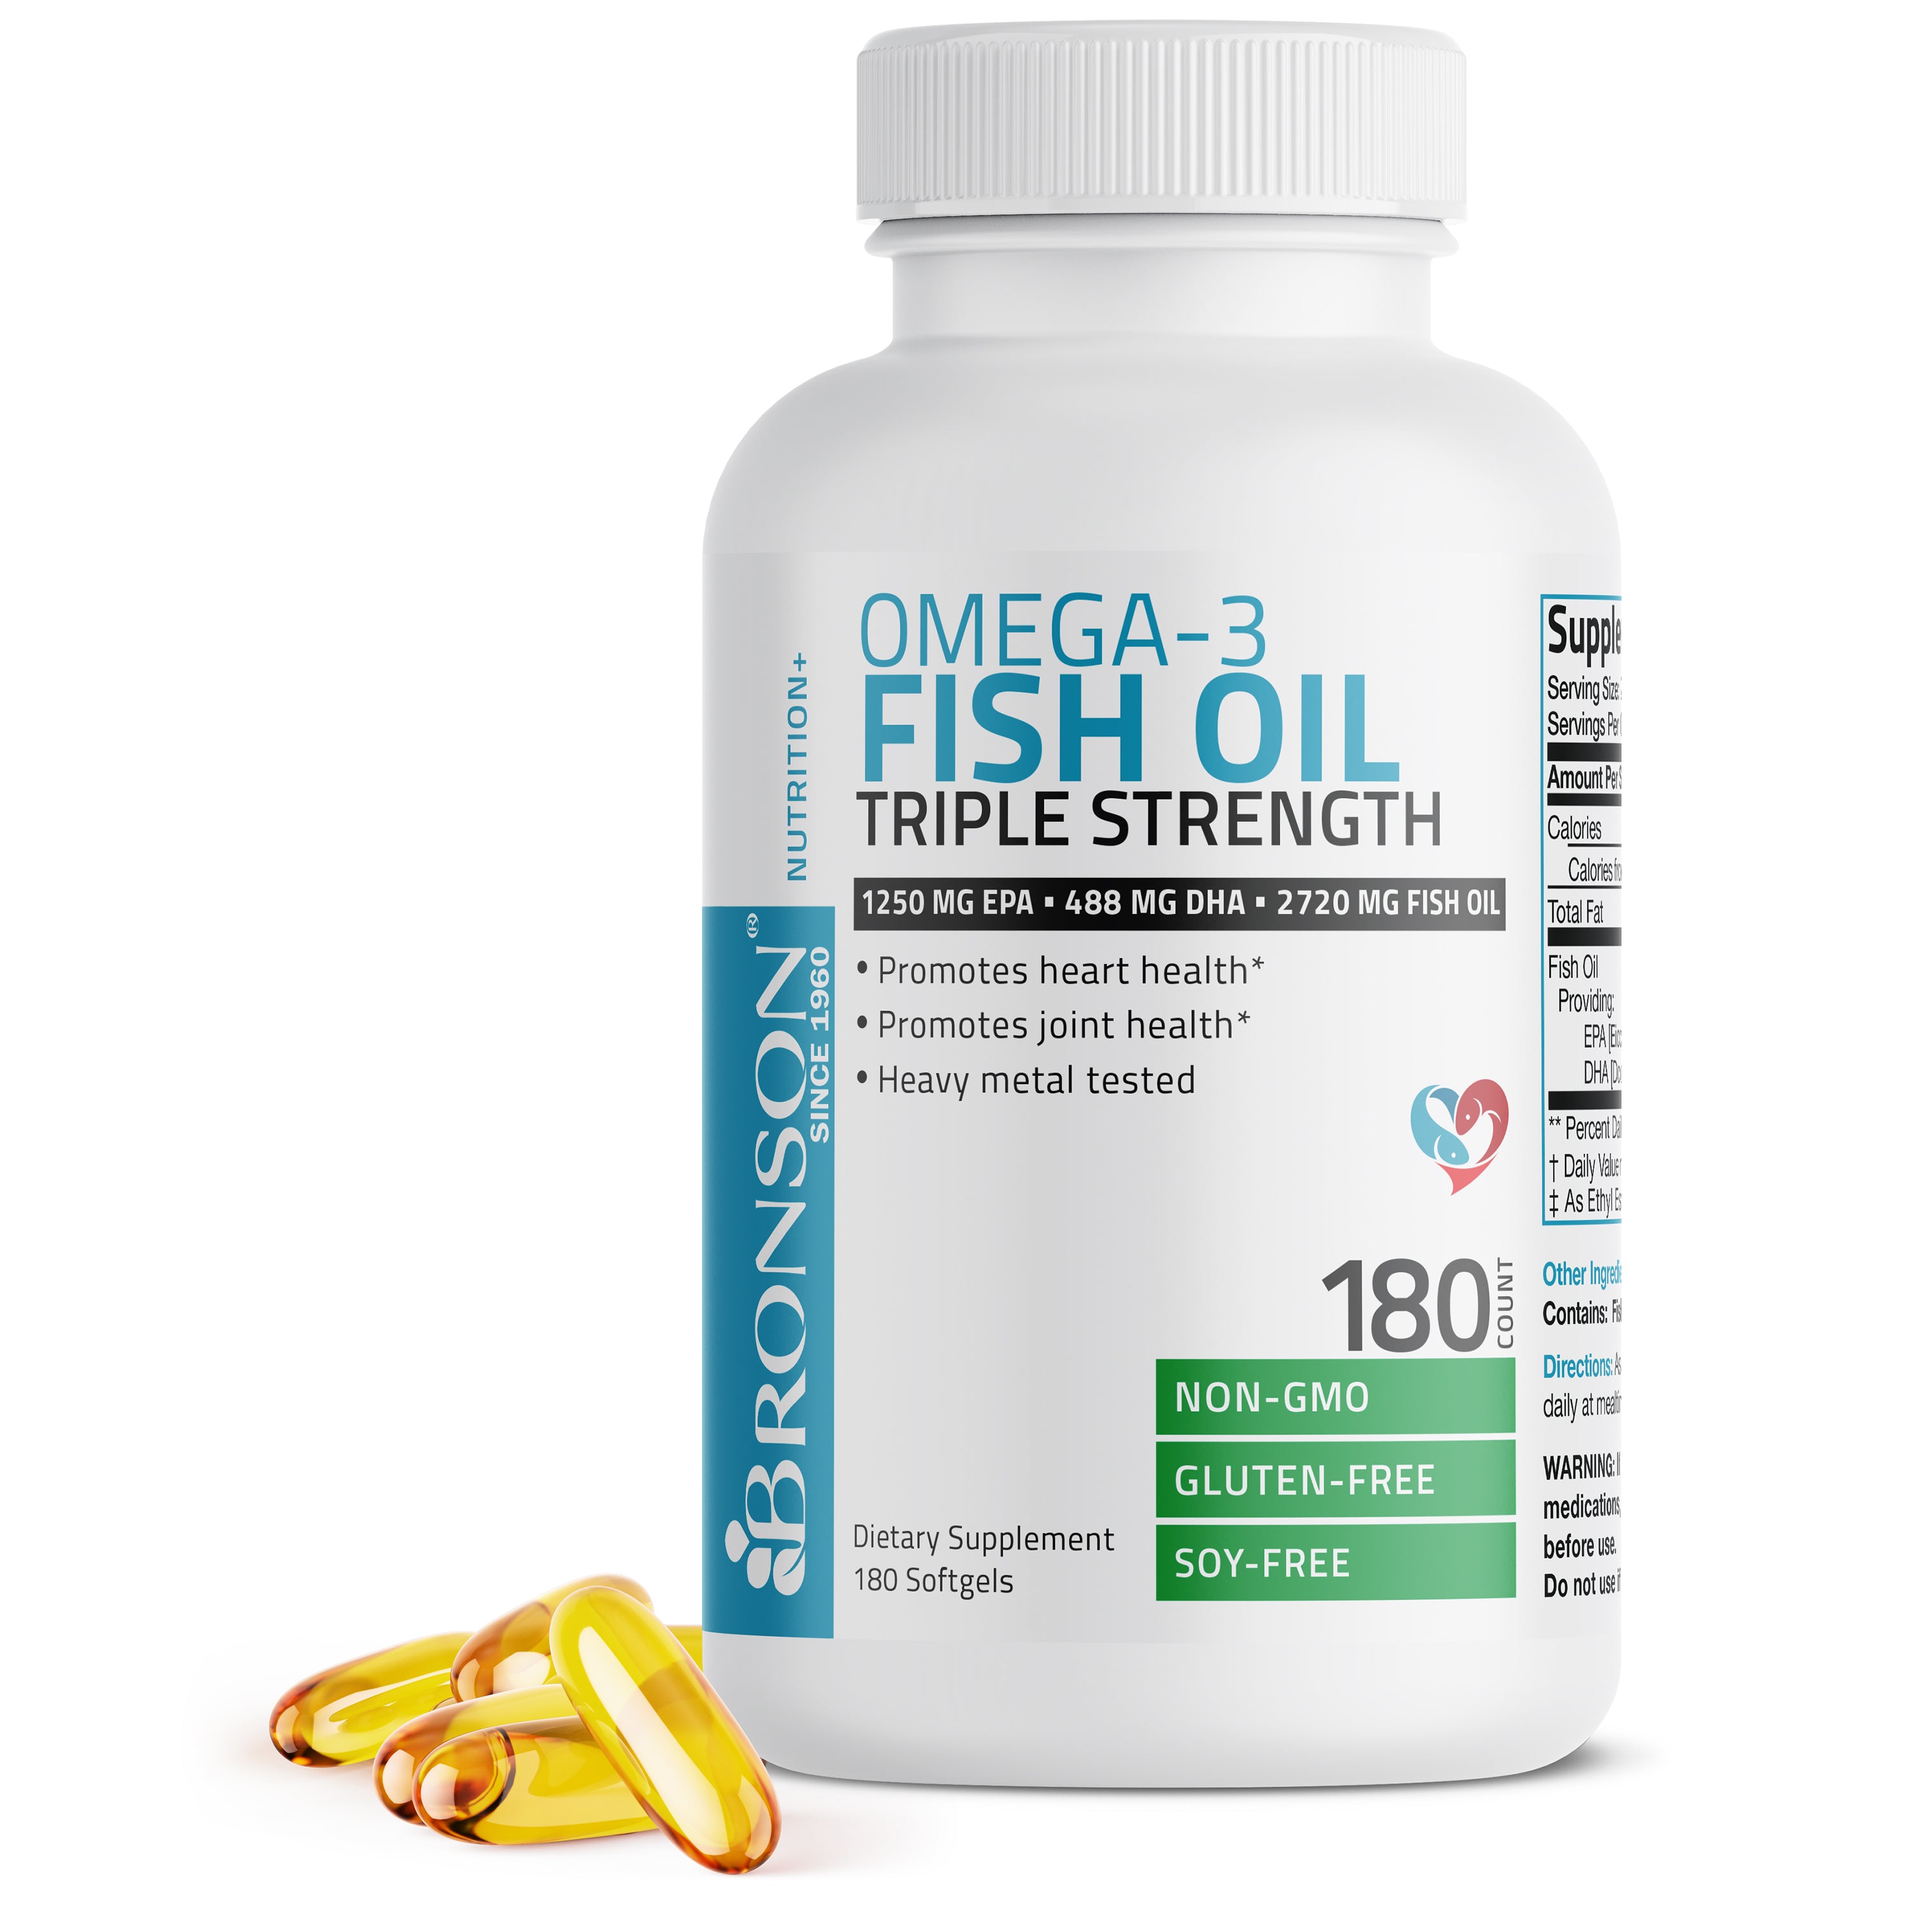 Omega-3 Fish Oil EPA DHA Triple Strength - 2,720 mg view 7 of 17